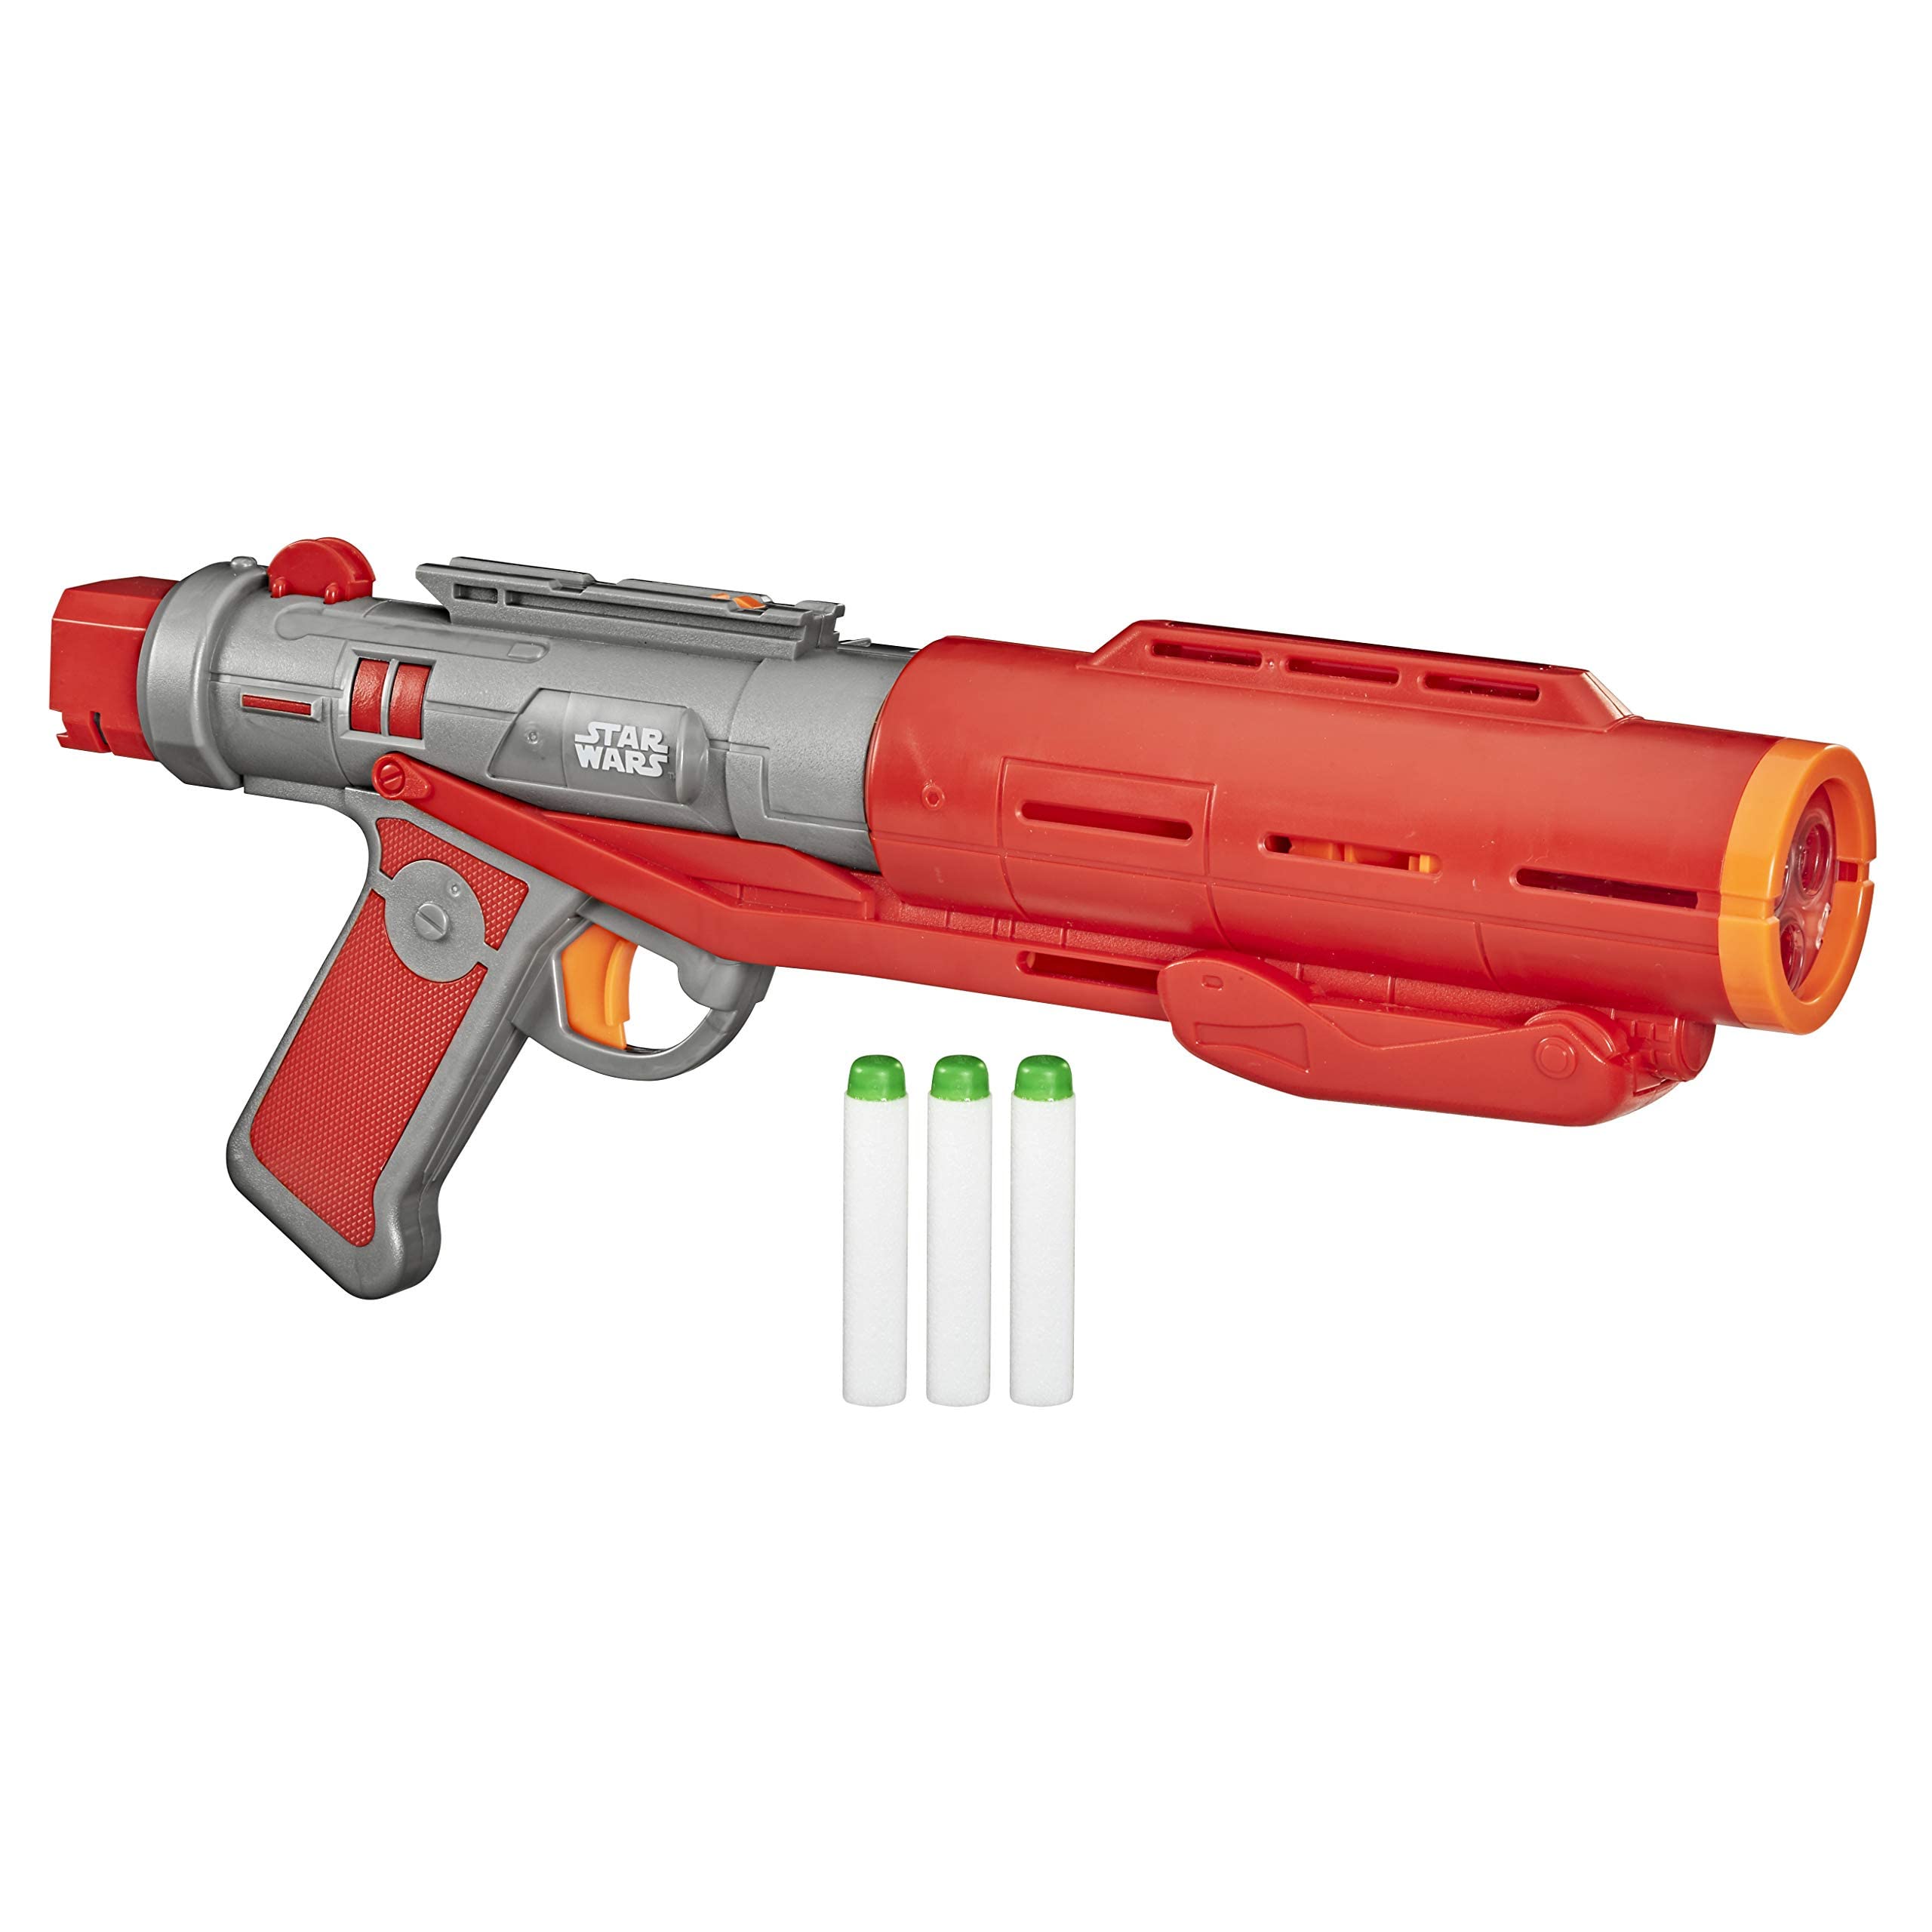 NERF Star Wars Imperial Death Trooper Deluxe Dart Blaster, The Mandalorian, звуки бластера, световые эффекты, 3 светящихся в темноте дротика Nerf